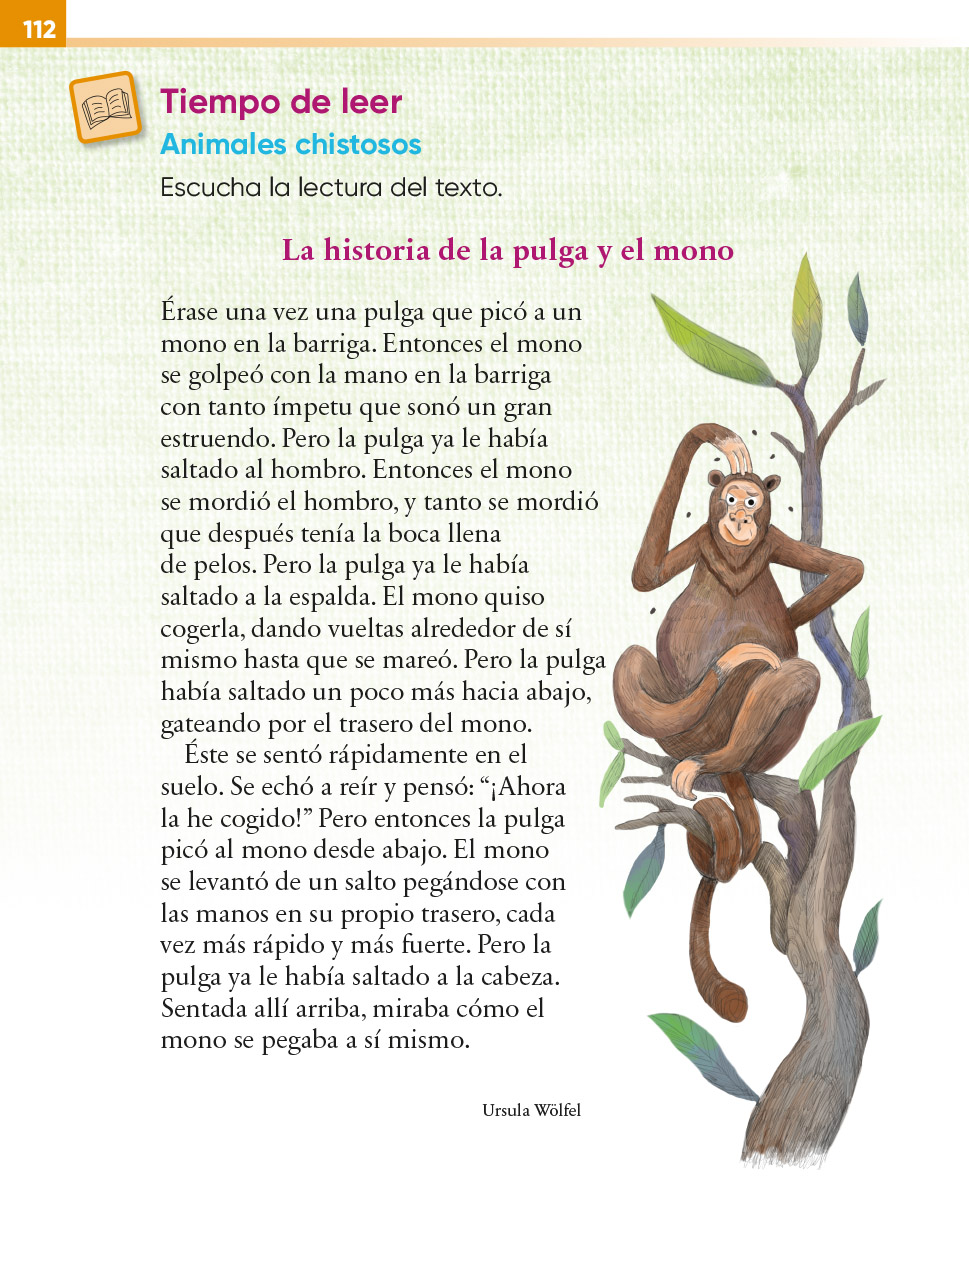 Lengua Materna Español Segundo Grado 2020 2021 Página 112 De 225 Libros De Texto Online 6484